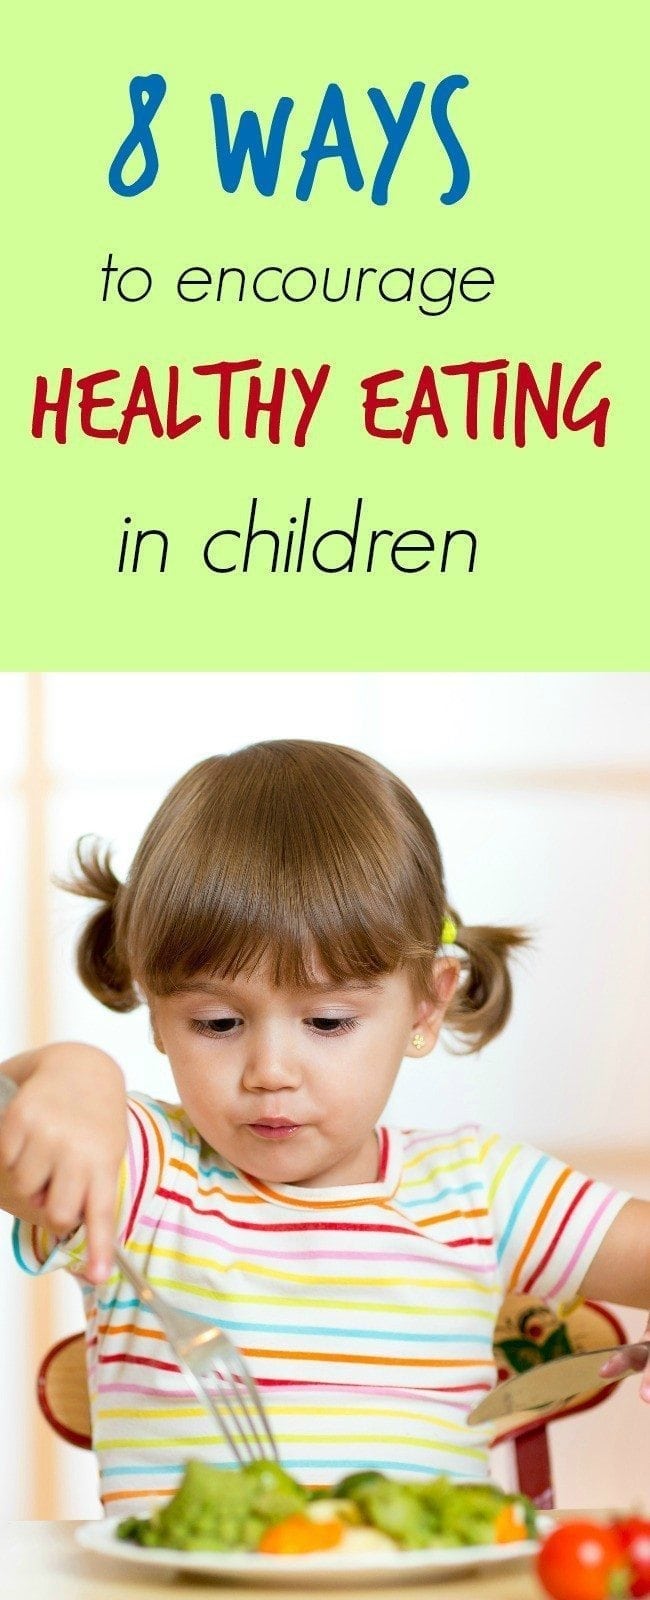 10 Ways to Encourage Healthy Eating in Childdren - Clarks Condensed